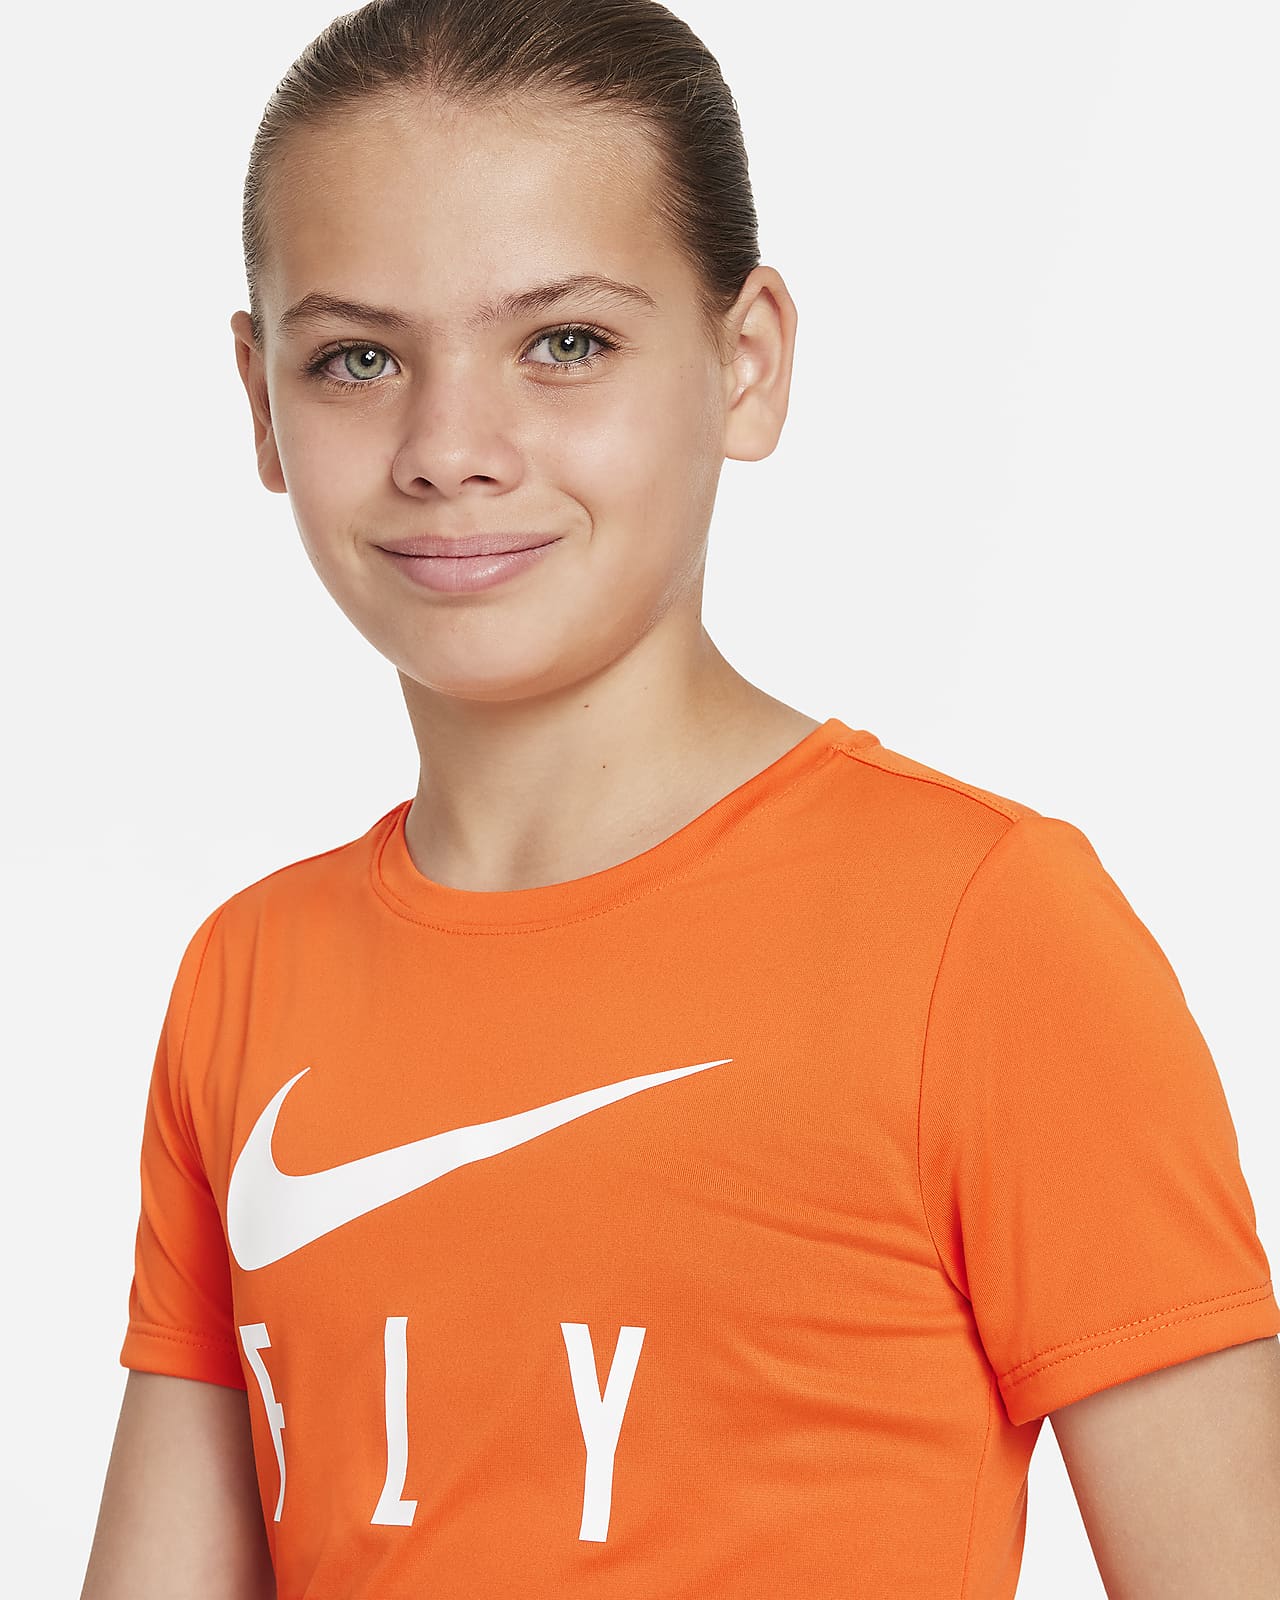 Nike Dri-FIT T-Shirt. Big Fly One (Girls\') Swoosh Kids